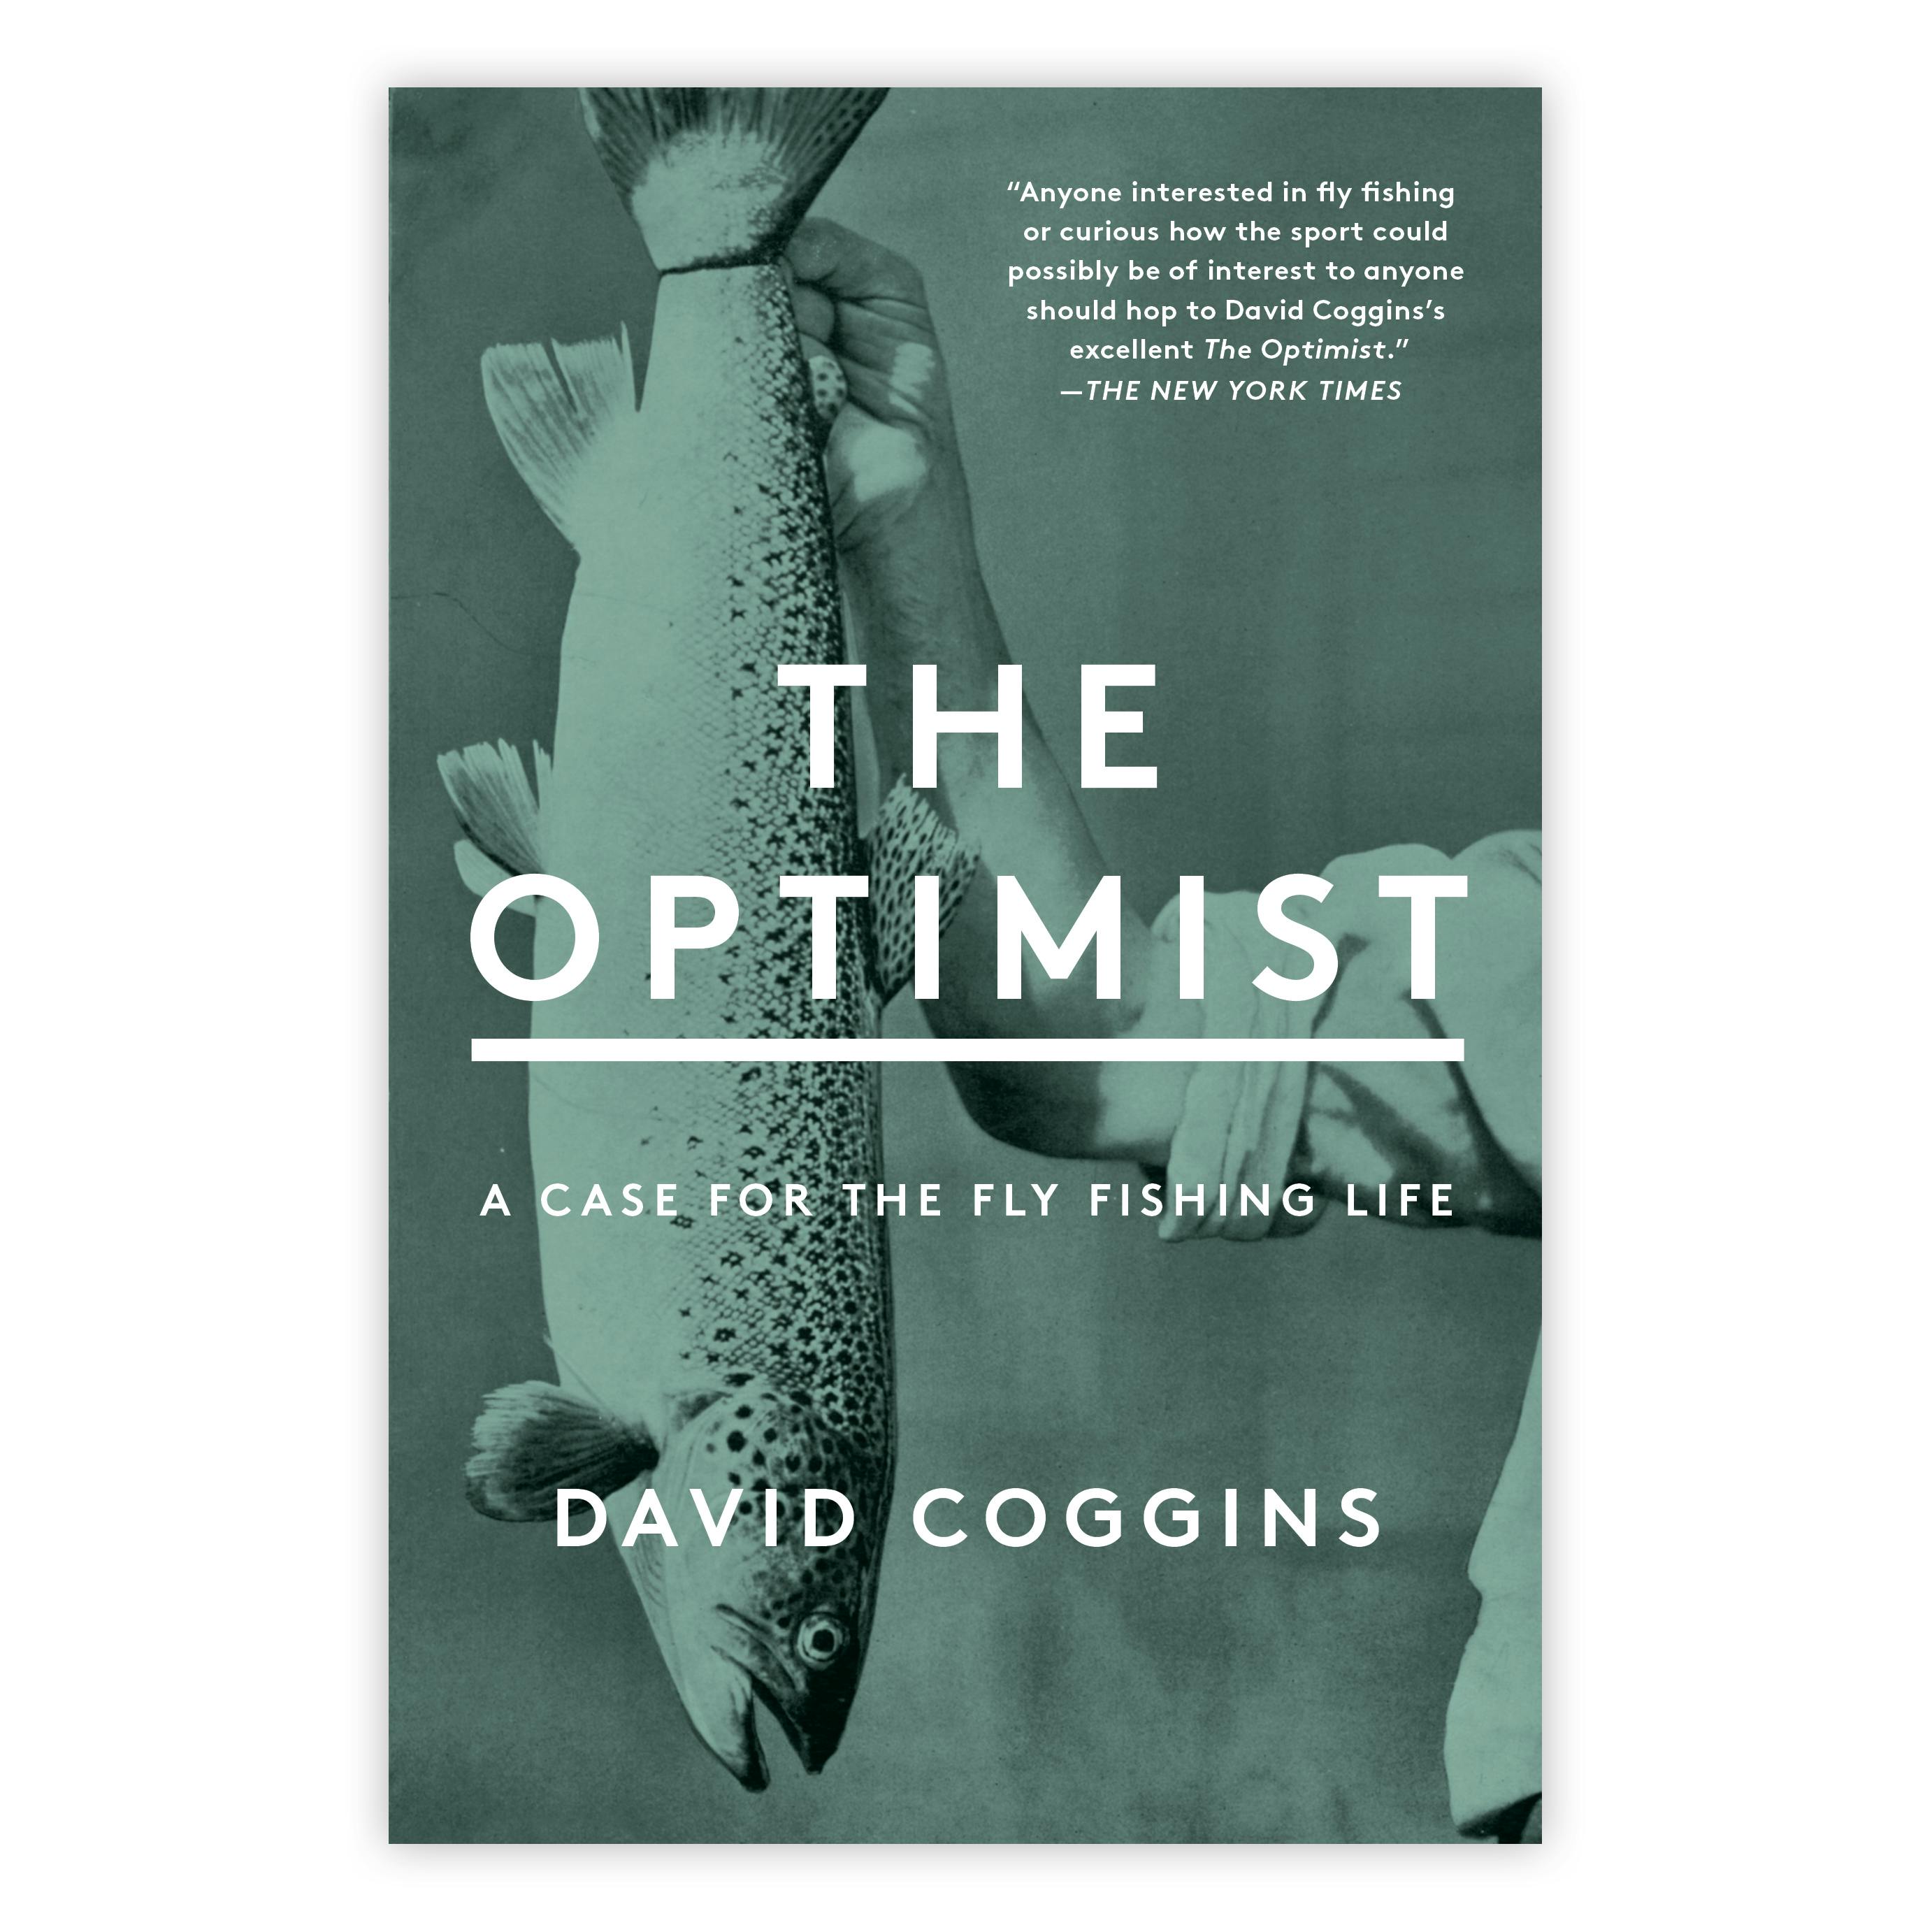 The Optimist by David Coggins